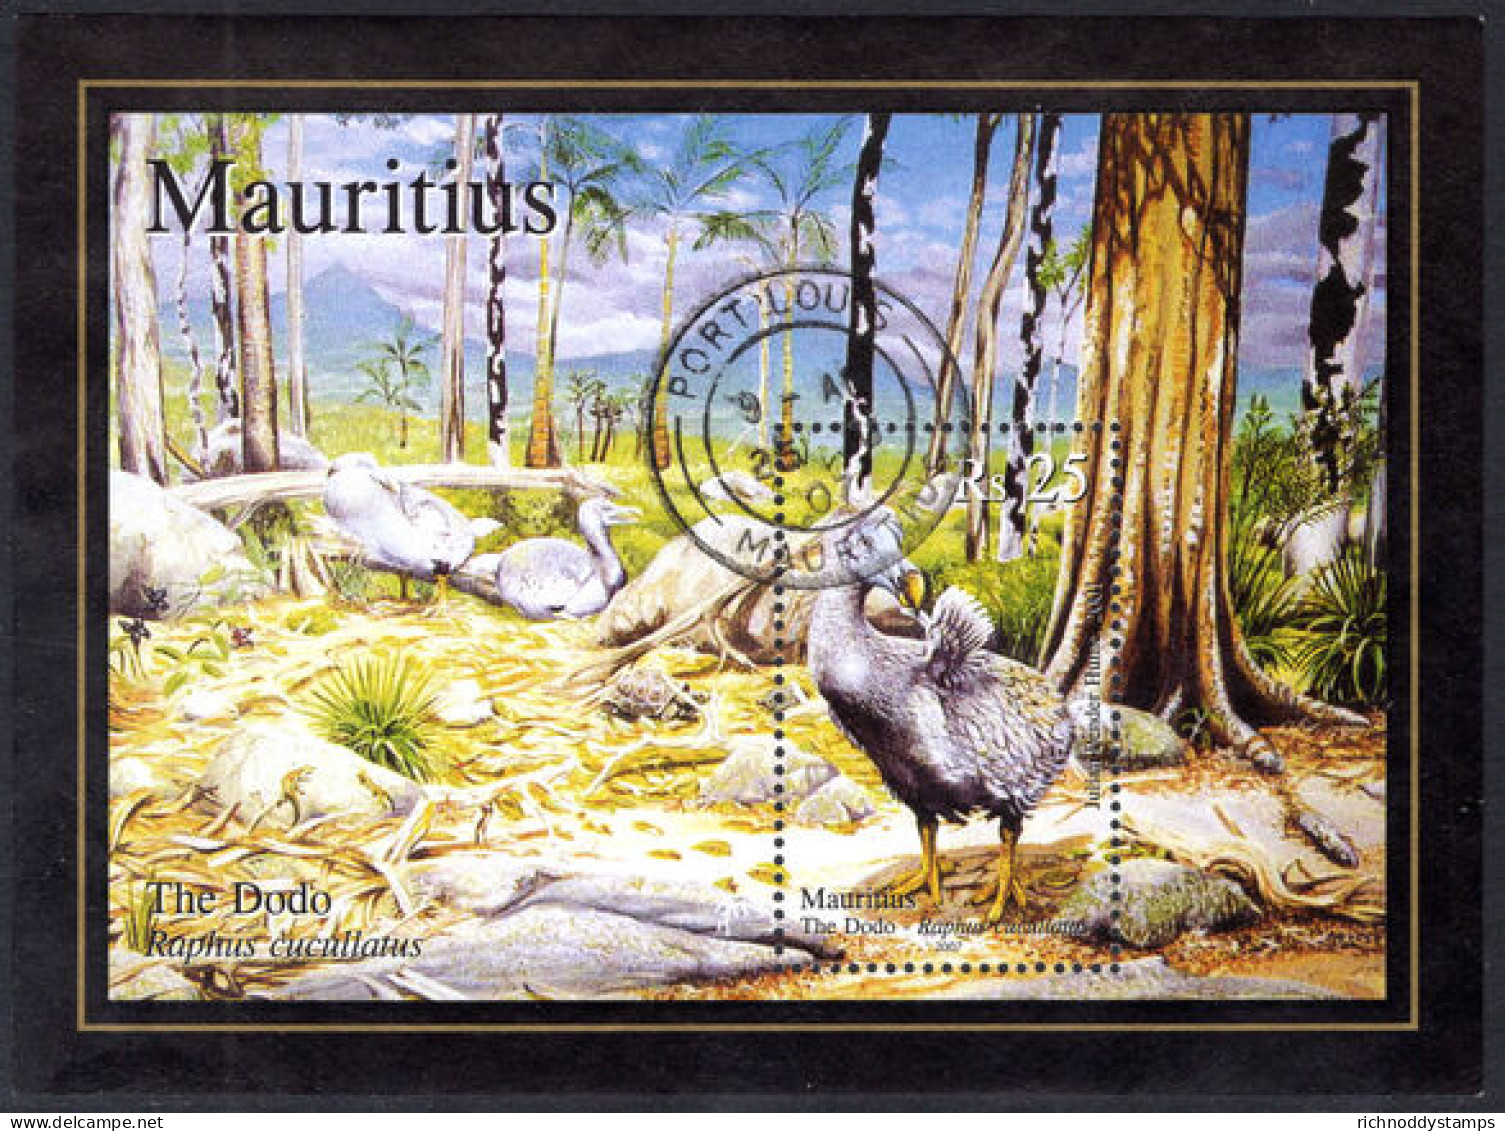 Mauritius 2007 Dodo Souvenir Sheet Fine Used. - Mauritius (1968-...)